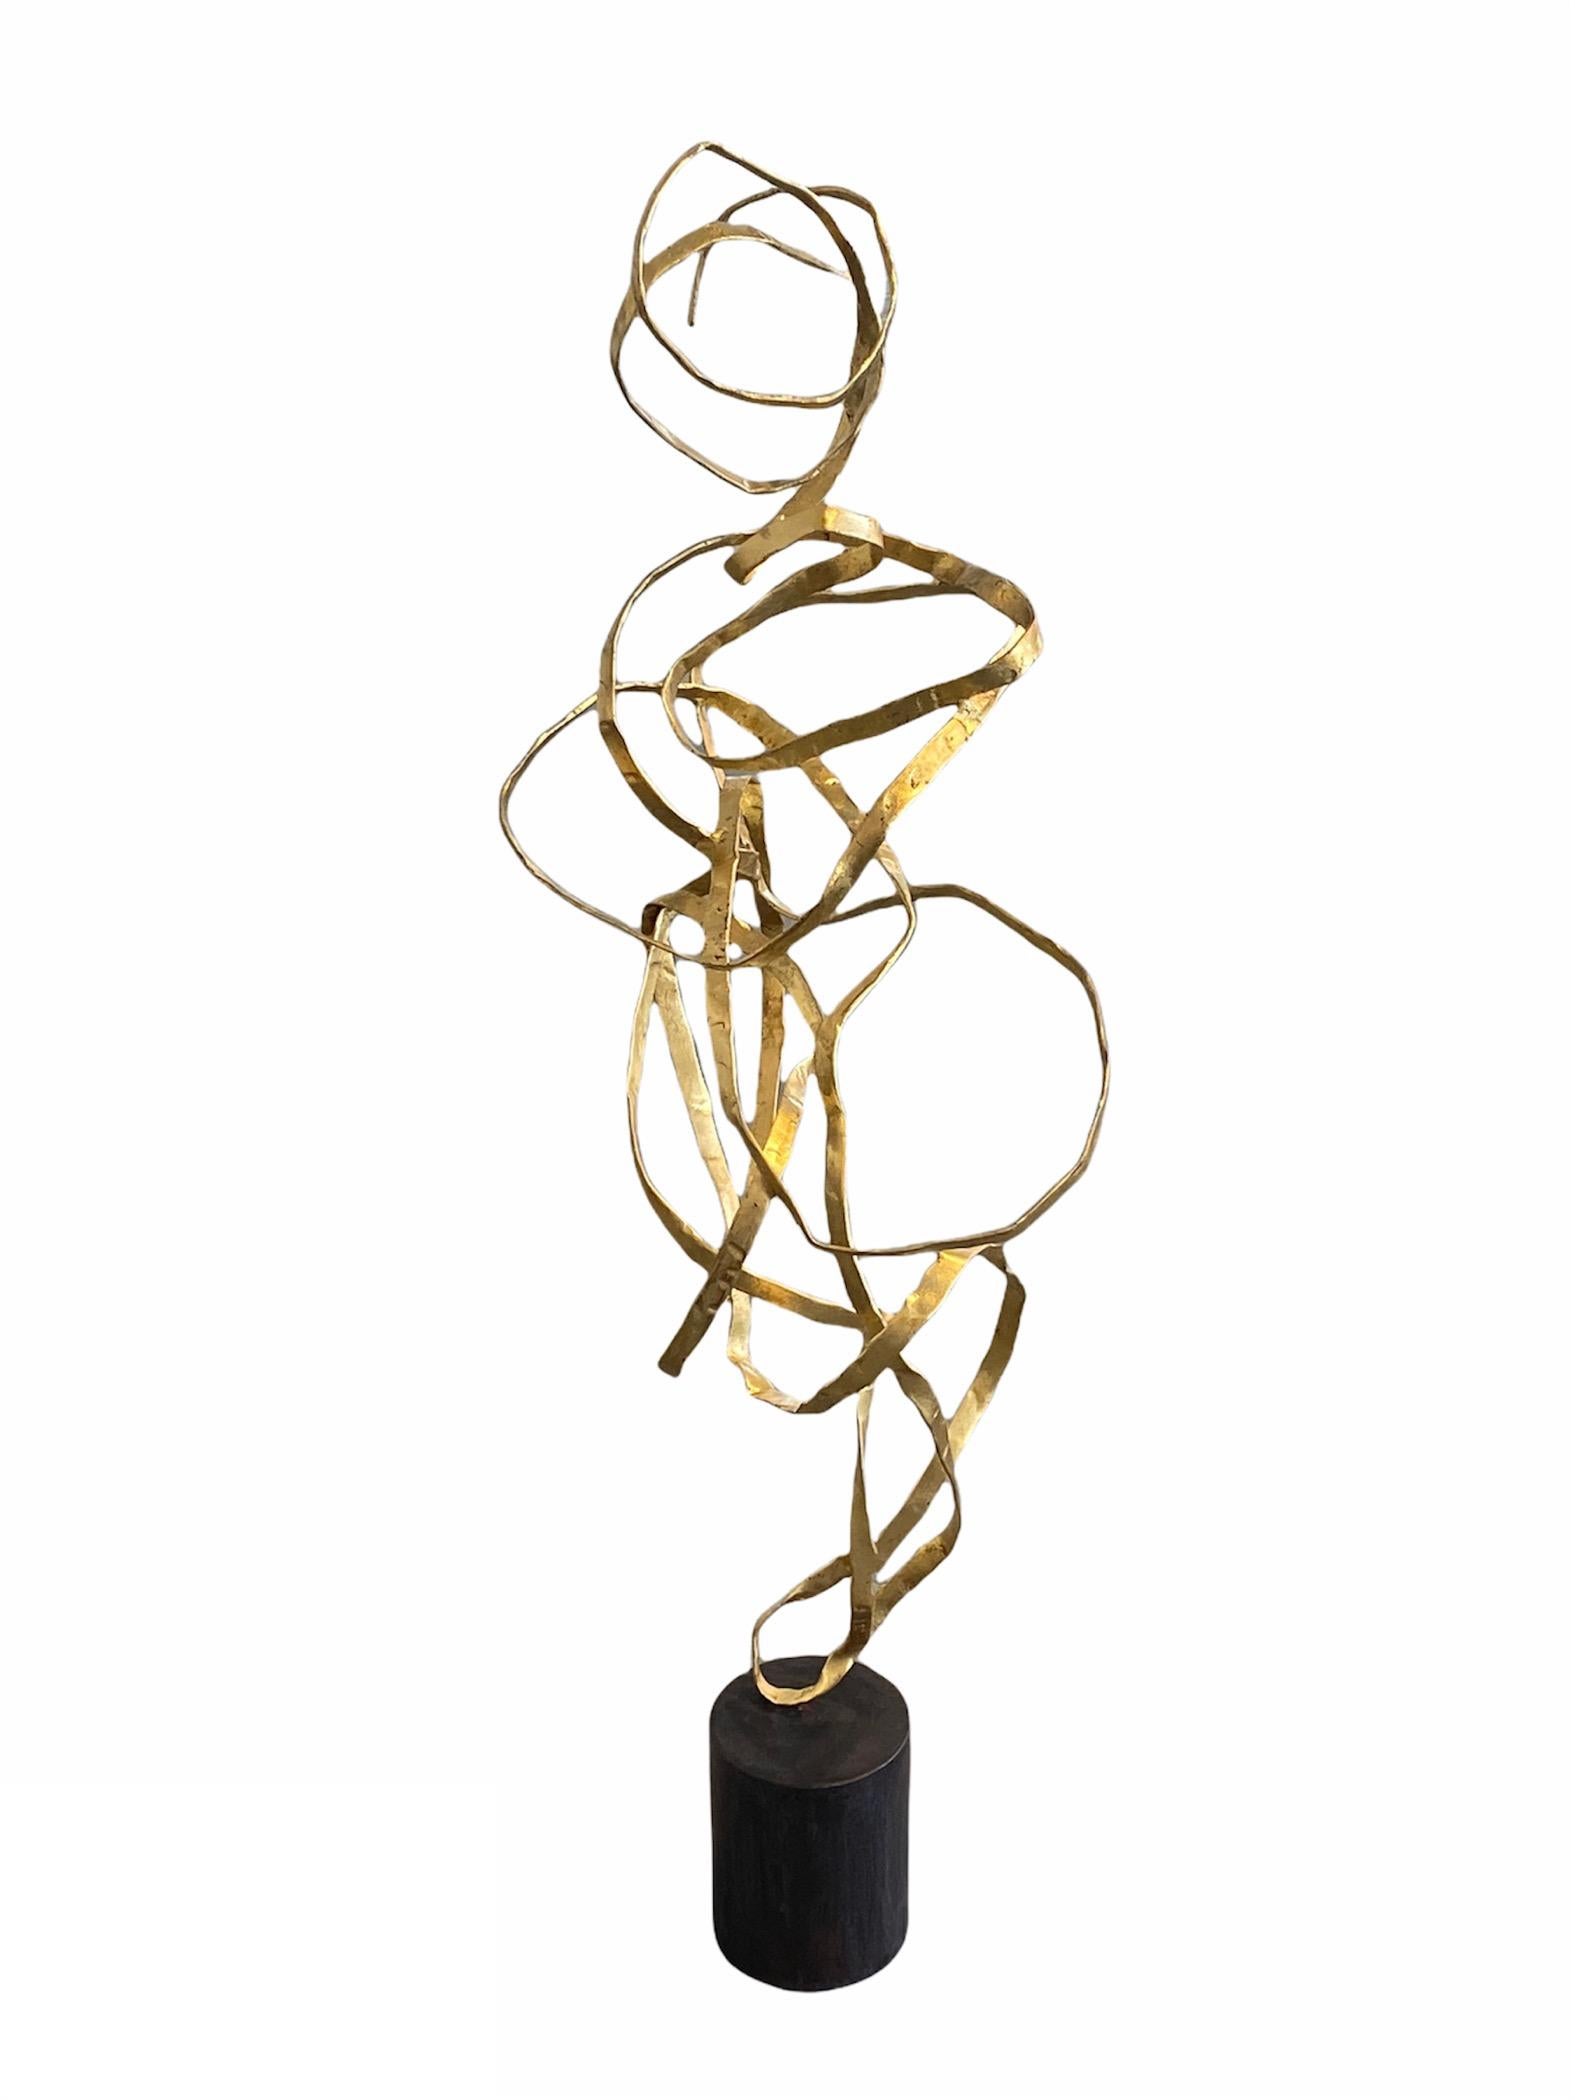 Continuous Lines - Sculpture by Erica Larkin Gaudet